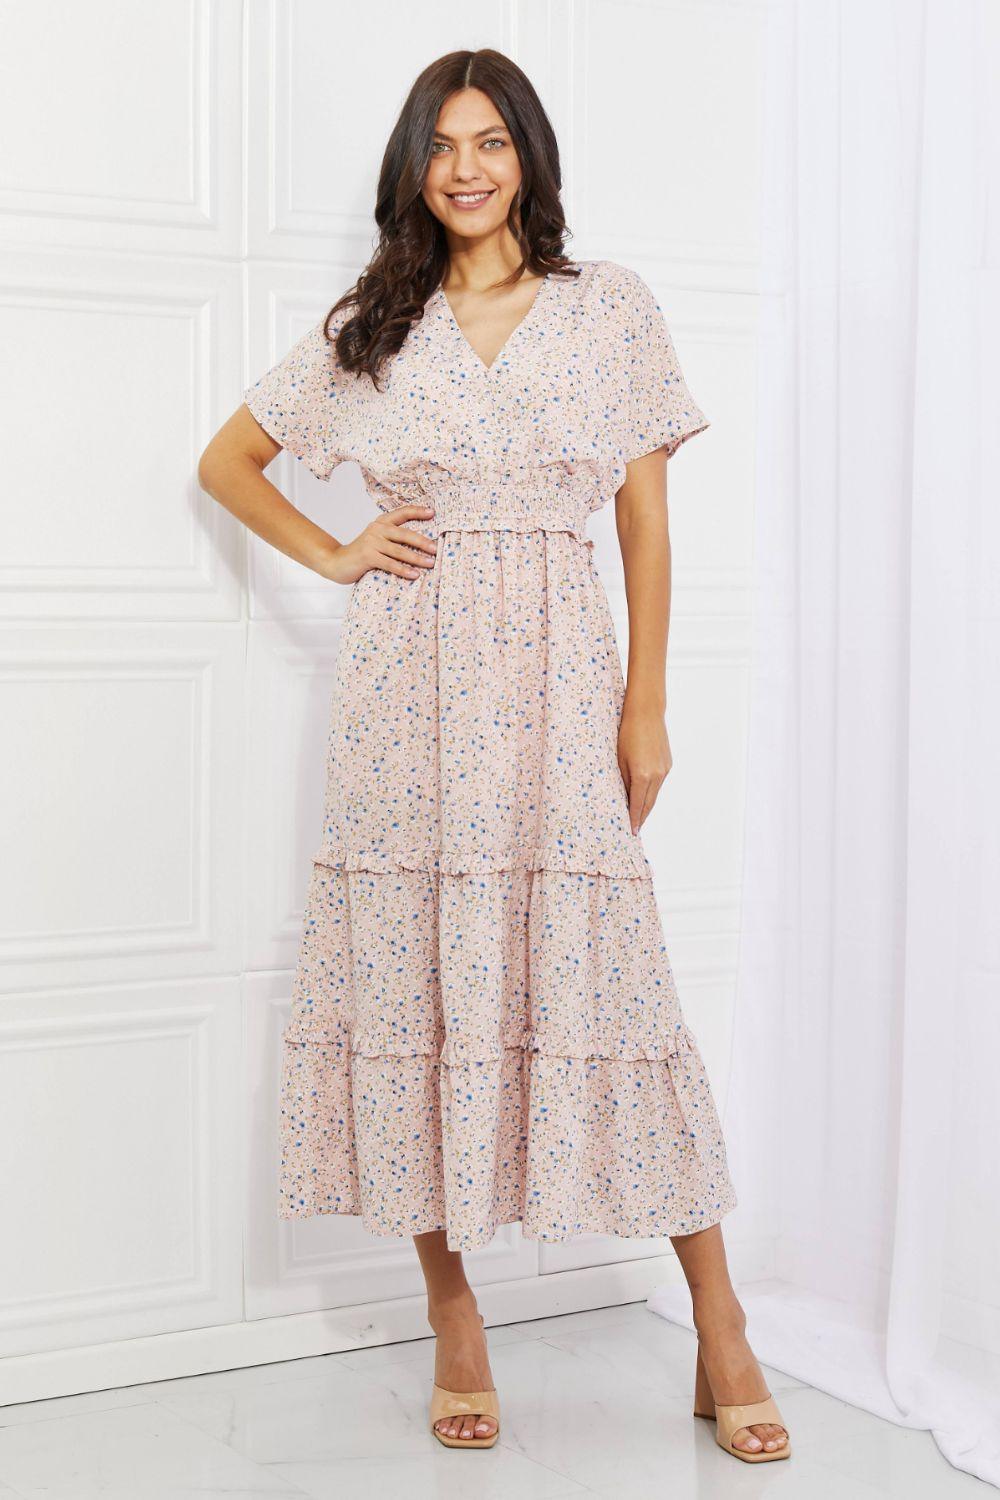 HEYSON Sweet Talk Kimono Sleeve Maxi Dress in Blush Pink - God's Girl Gifts And Apparel